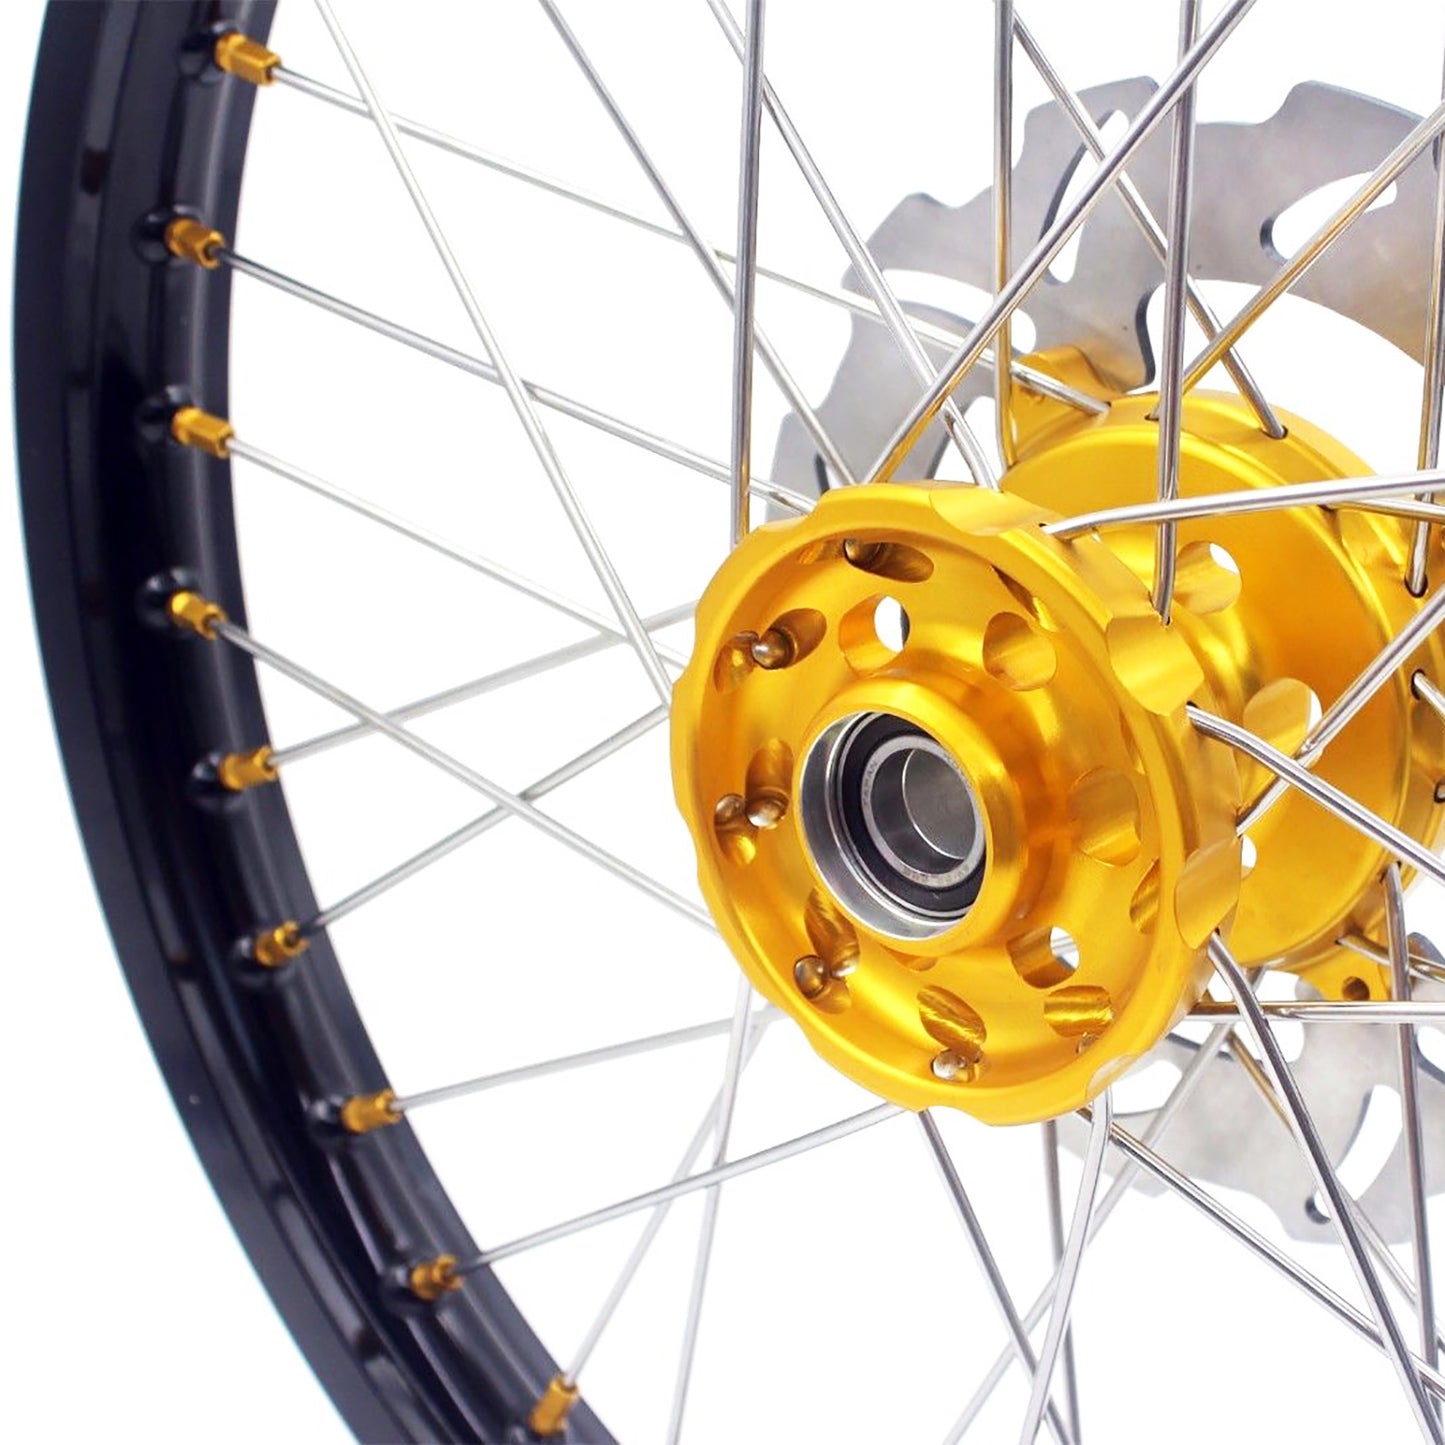 KKE 21 & 19 MX wheels rims set for Suzuki rmz250 07-19 rmz450 05-19 gold nipple silver spoke - KKE Racing